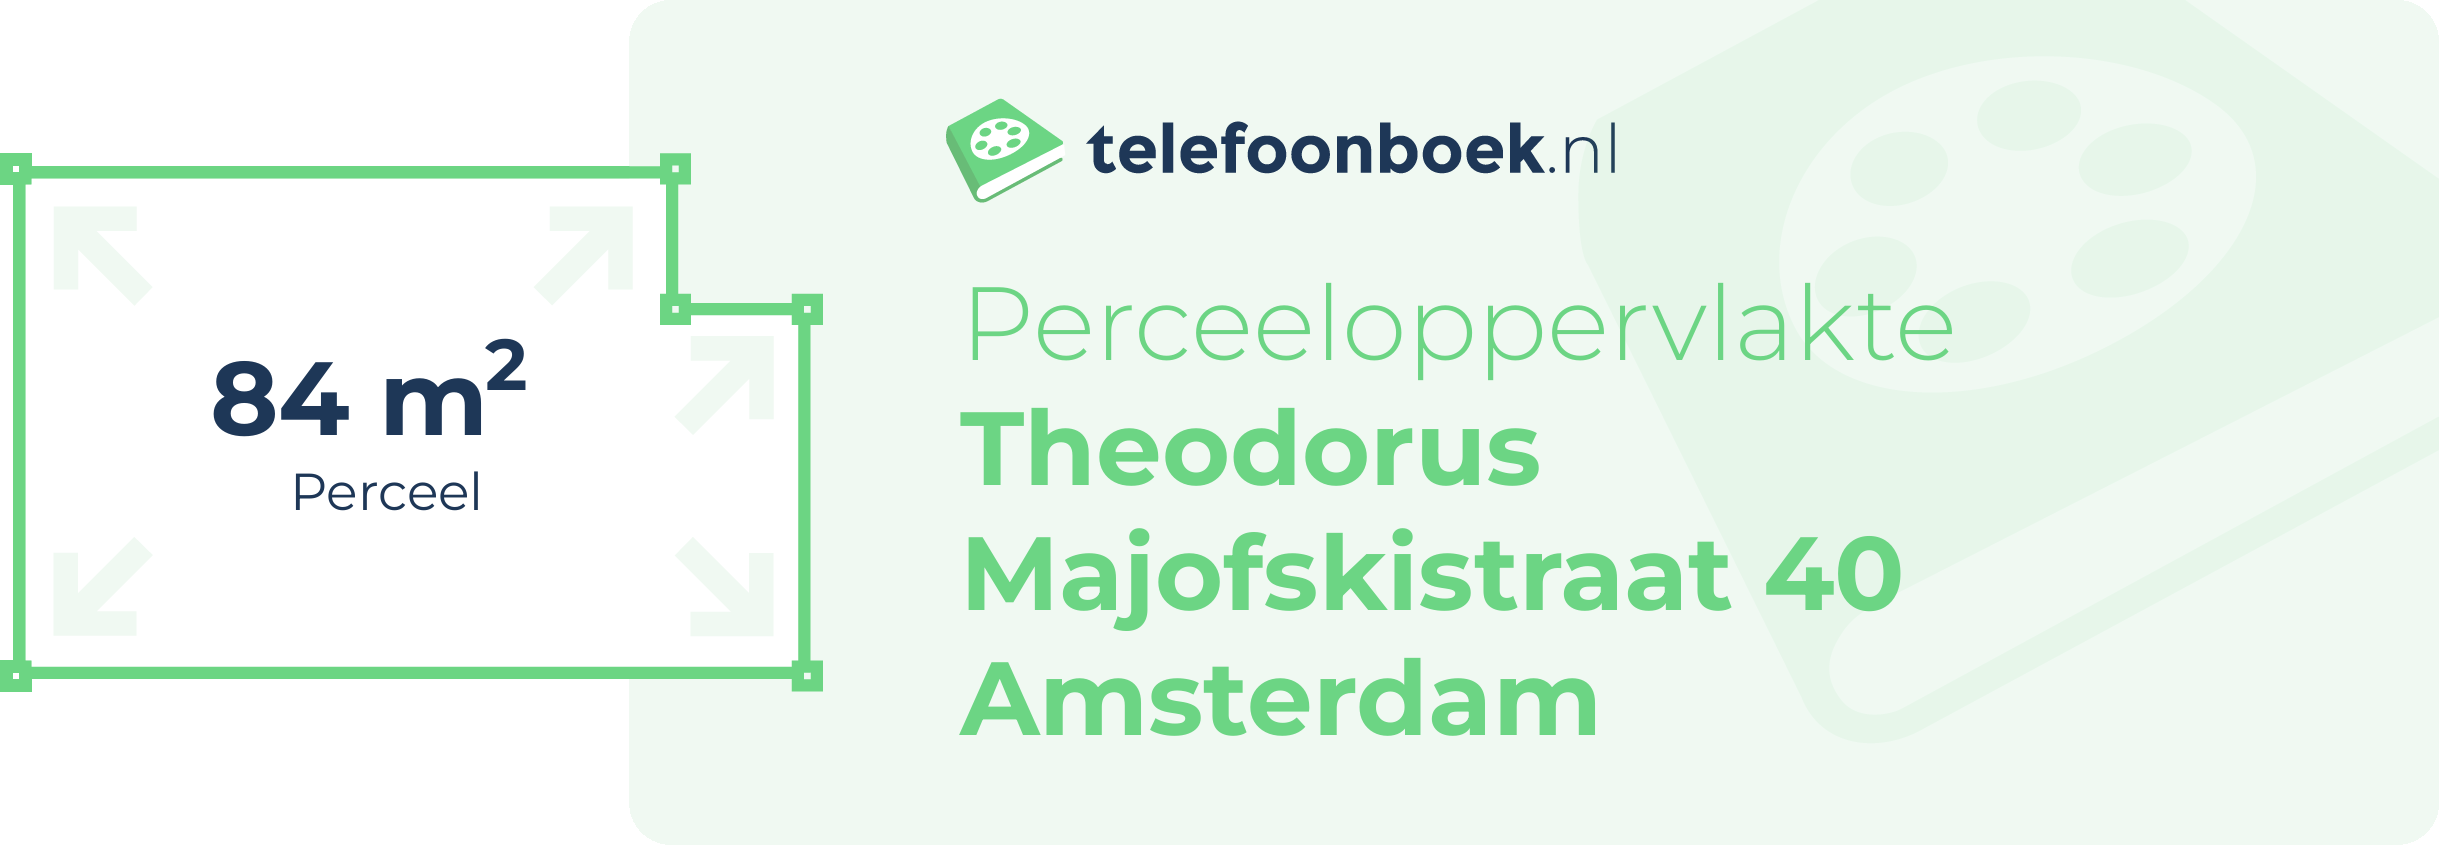 Perceeloppervlakte Theodorus Majofskistraat 40 Amsterdam